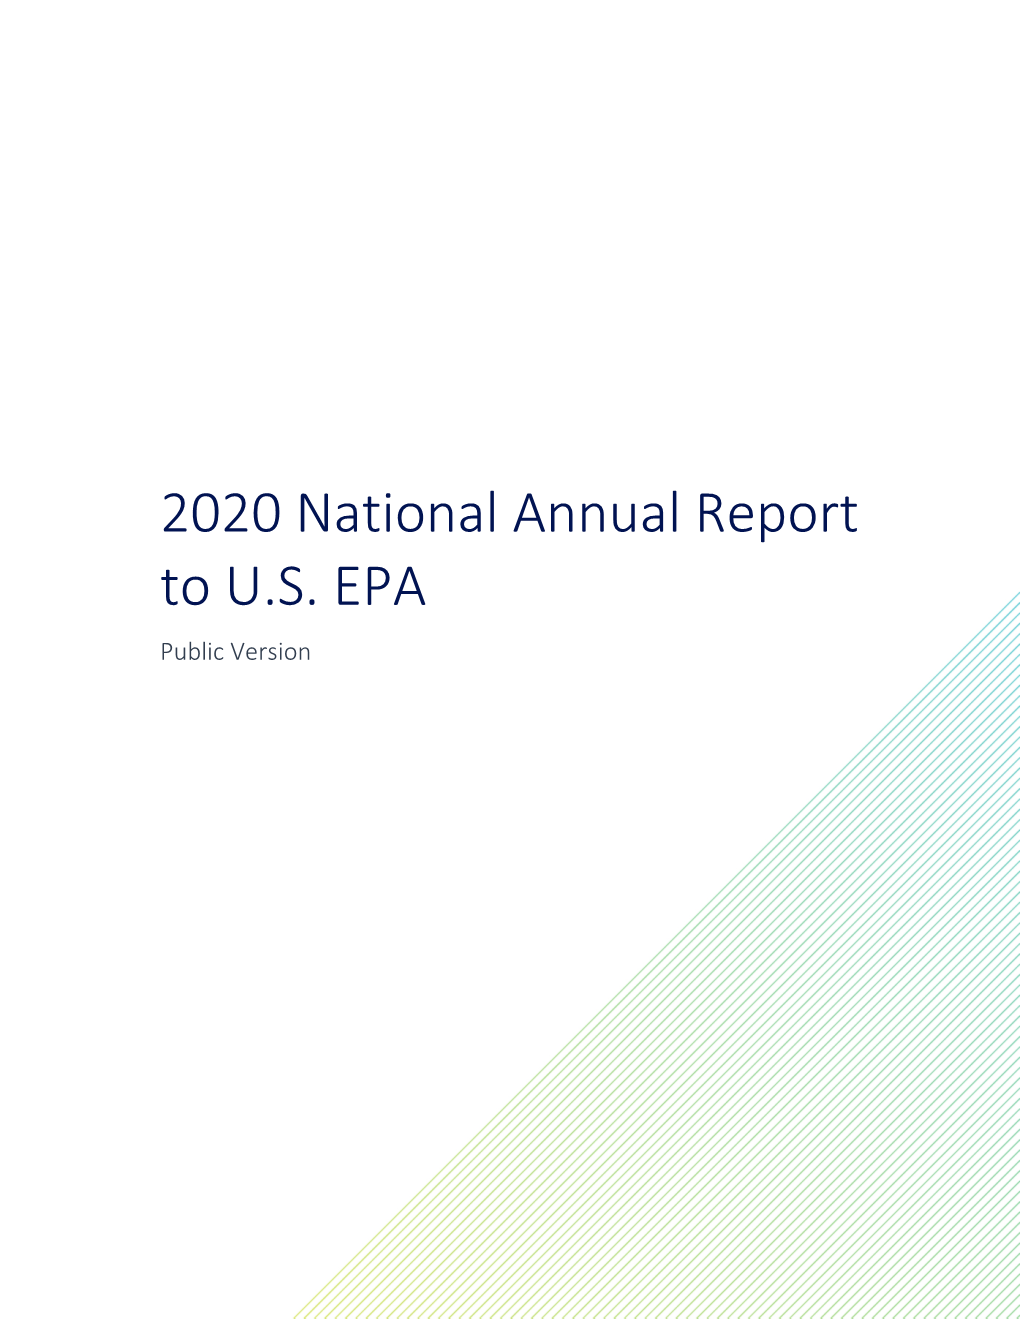 2020 National Annual Report to U.S. EPA Public Version